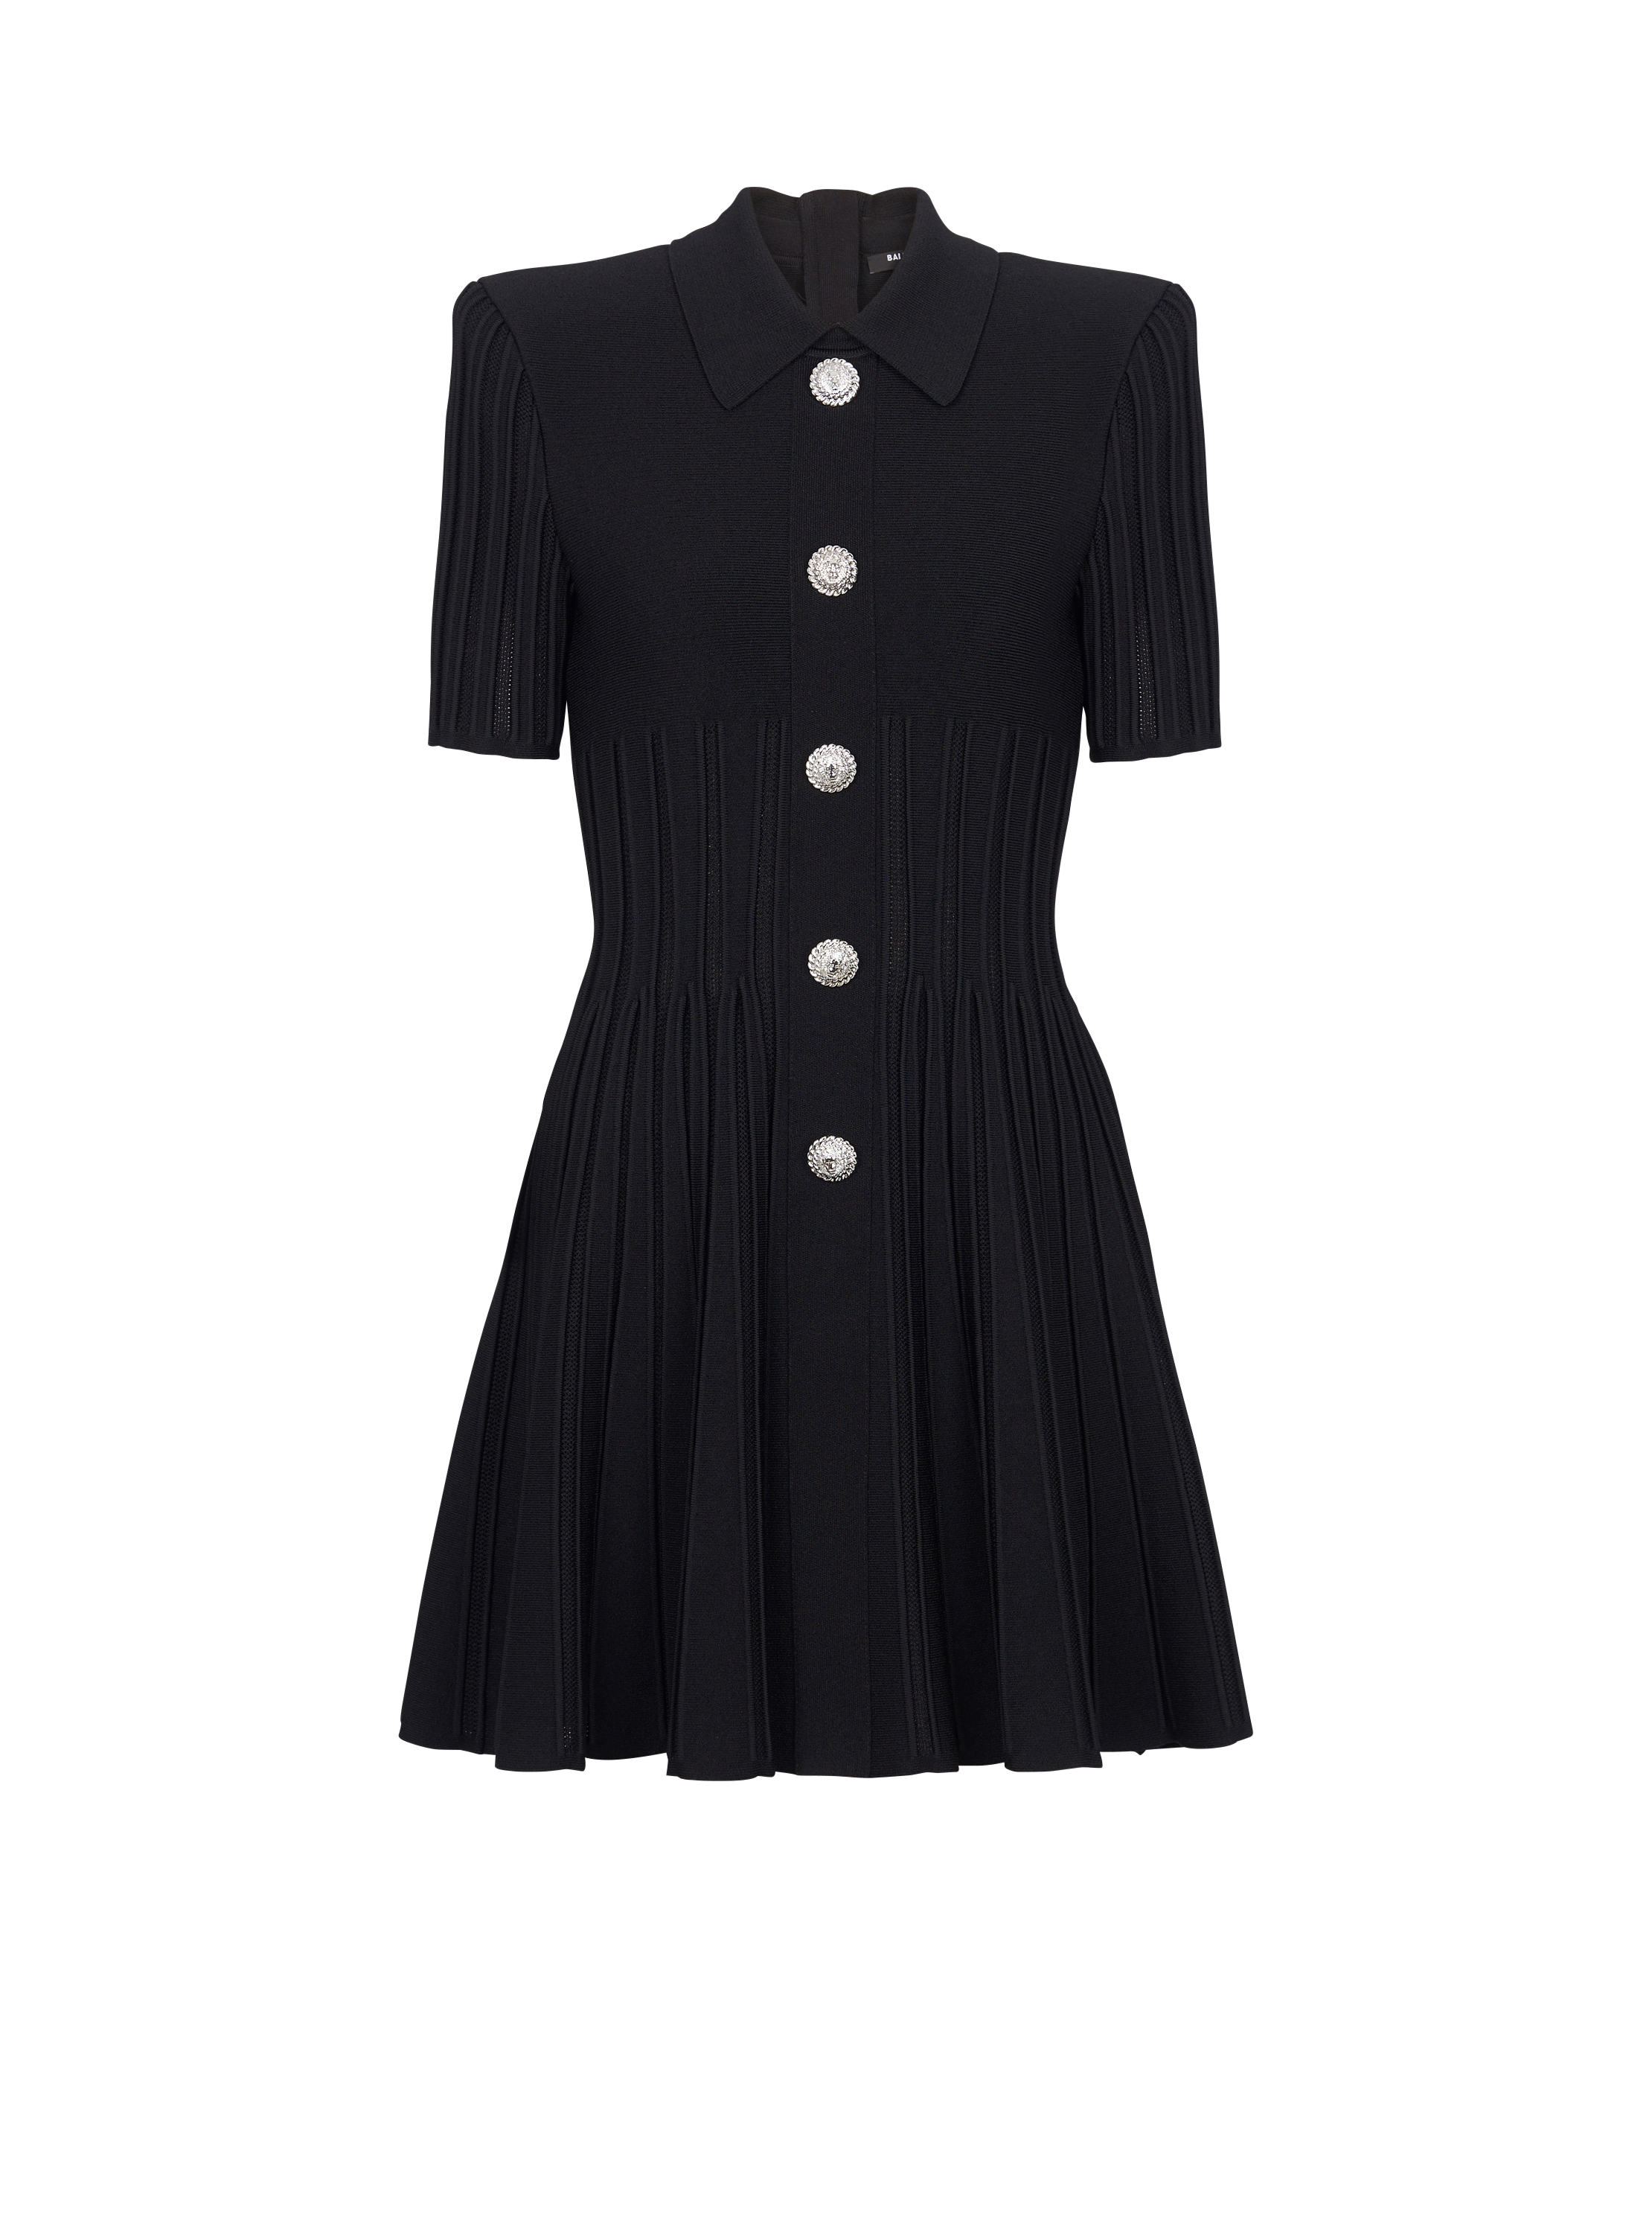 Short flared ribbed knit dress, black, hi-res